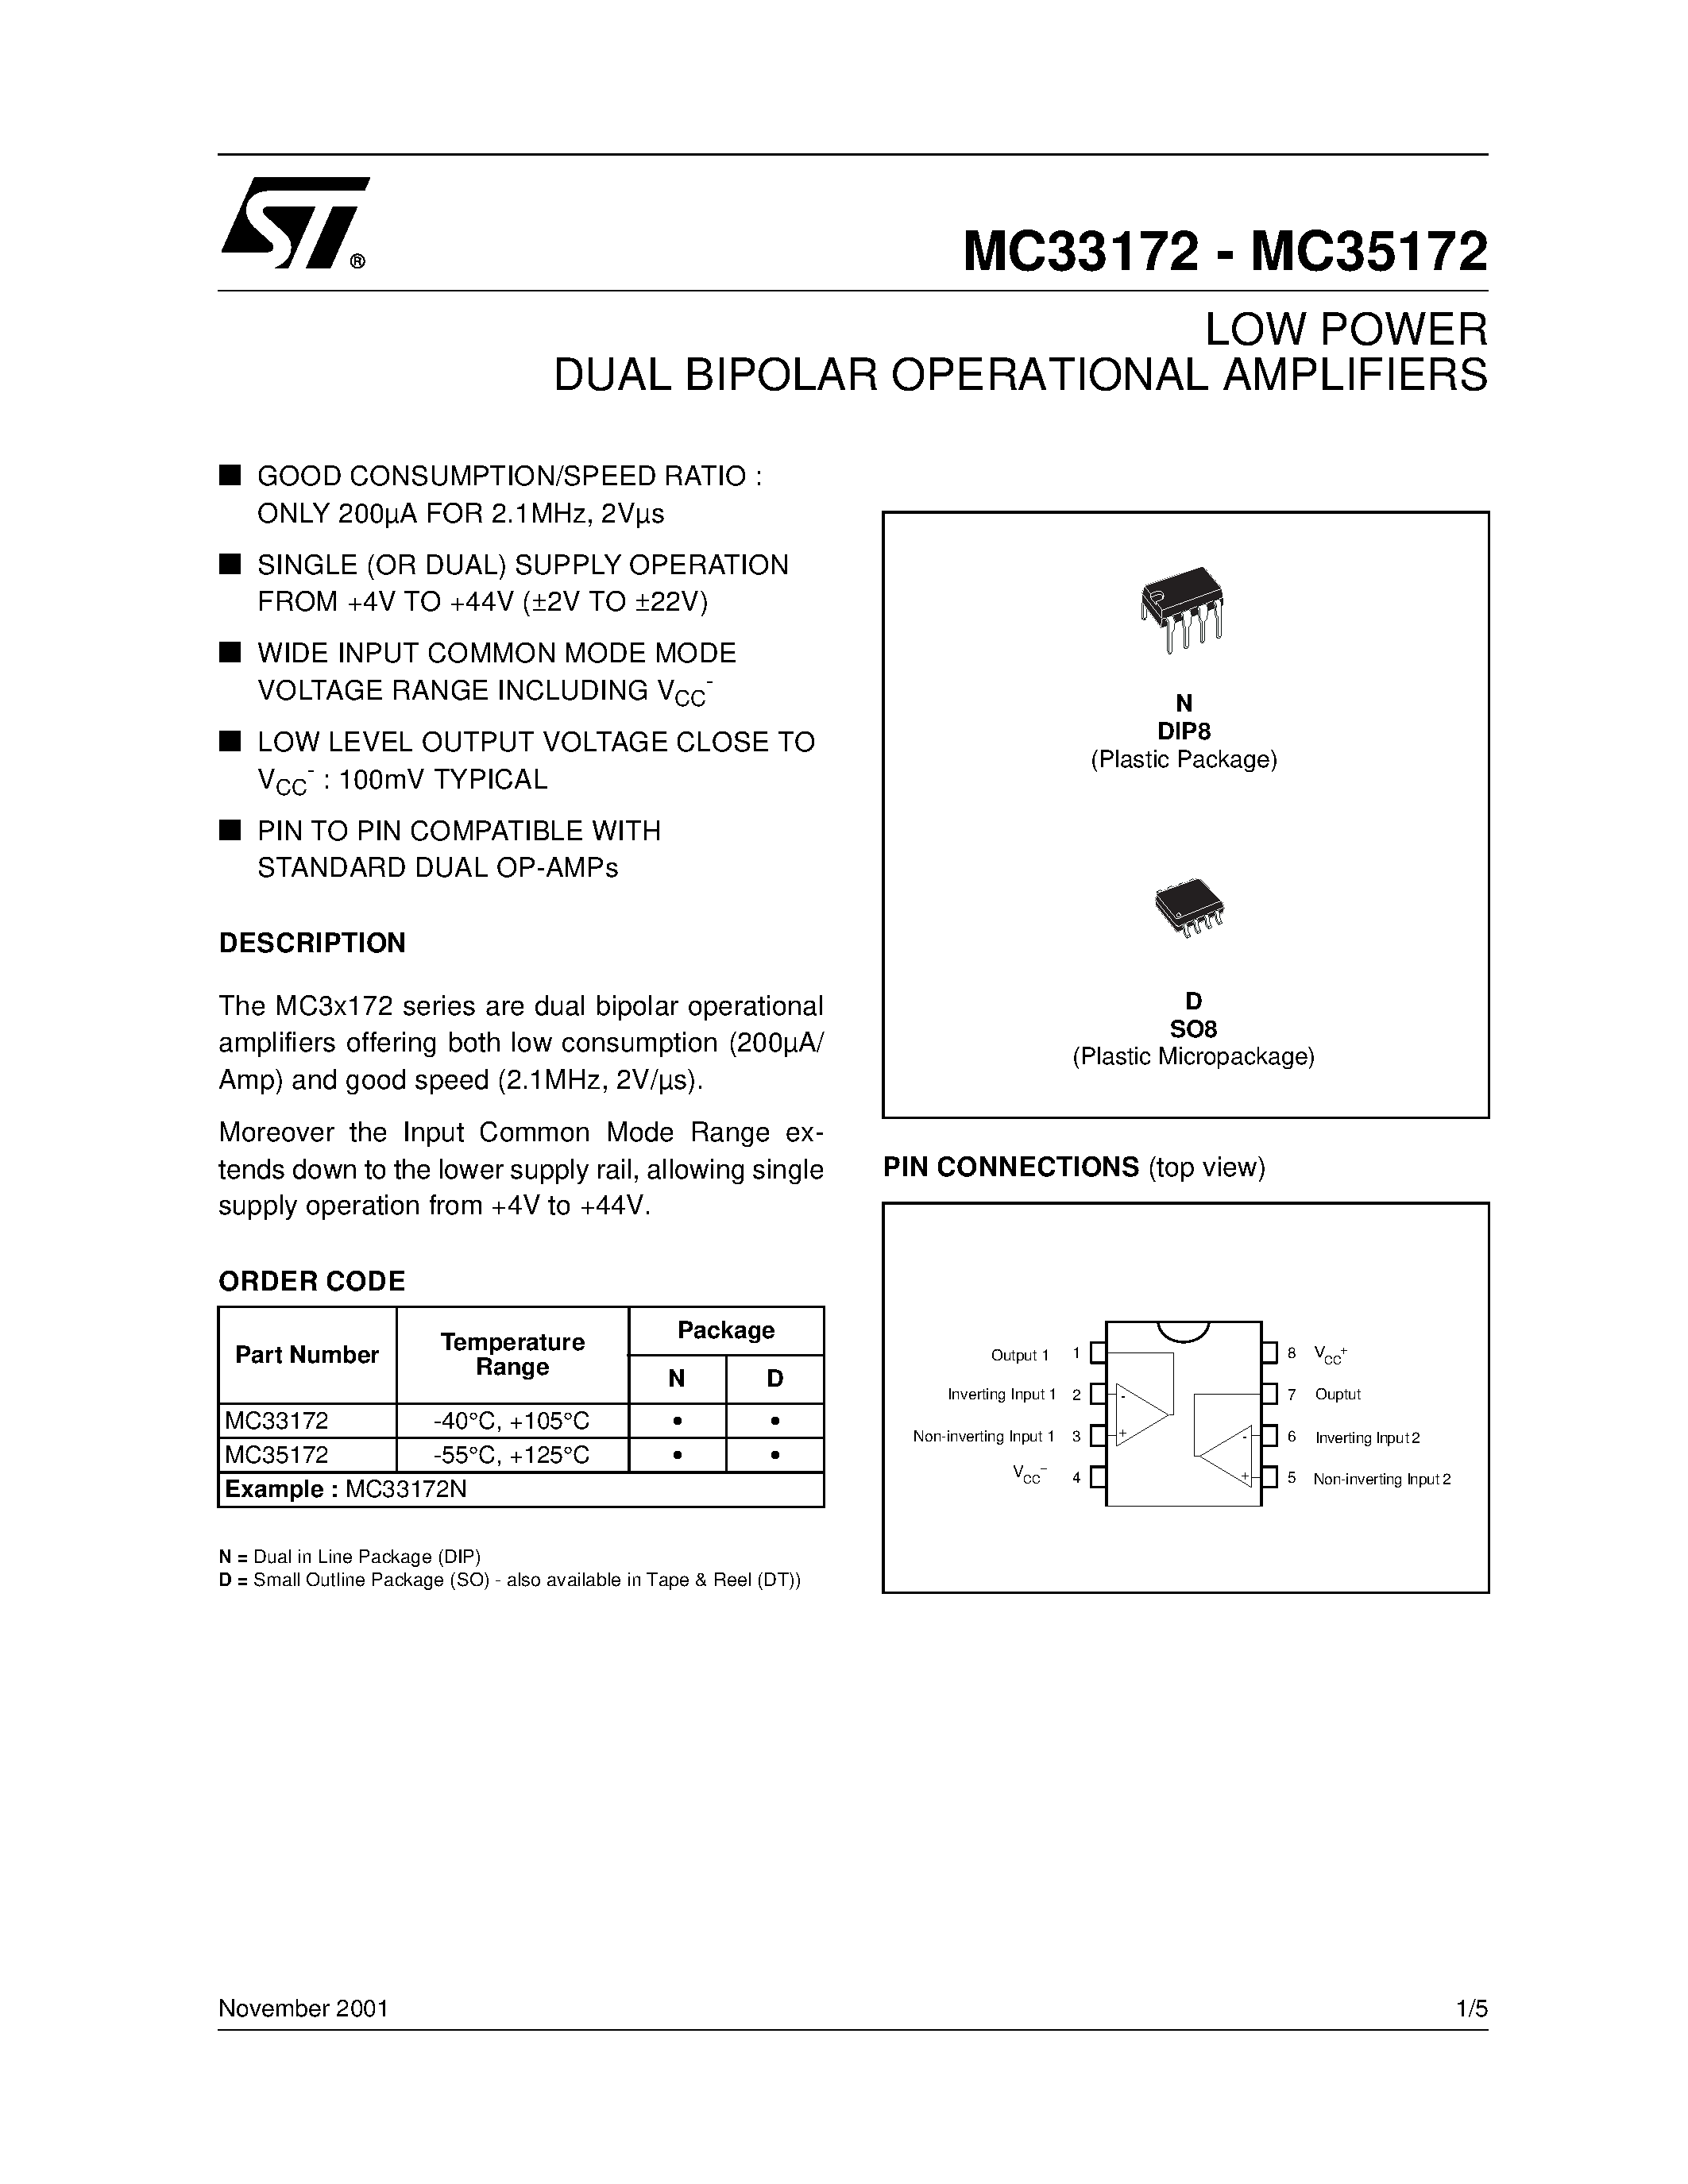 Datasheet MC33172 - LOW POWER QUAD BIPOLAR OPERATIONAL AMPLIFIERS page 1